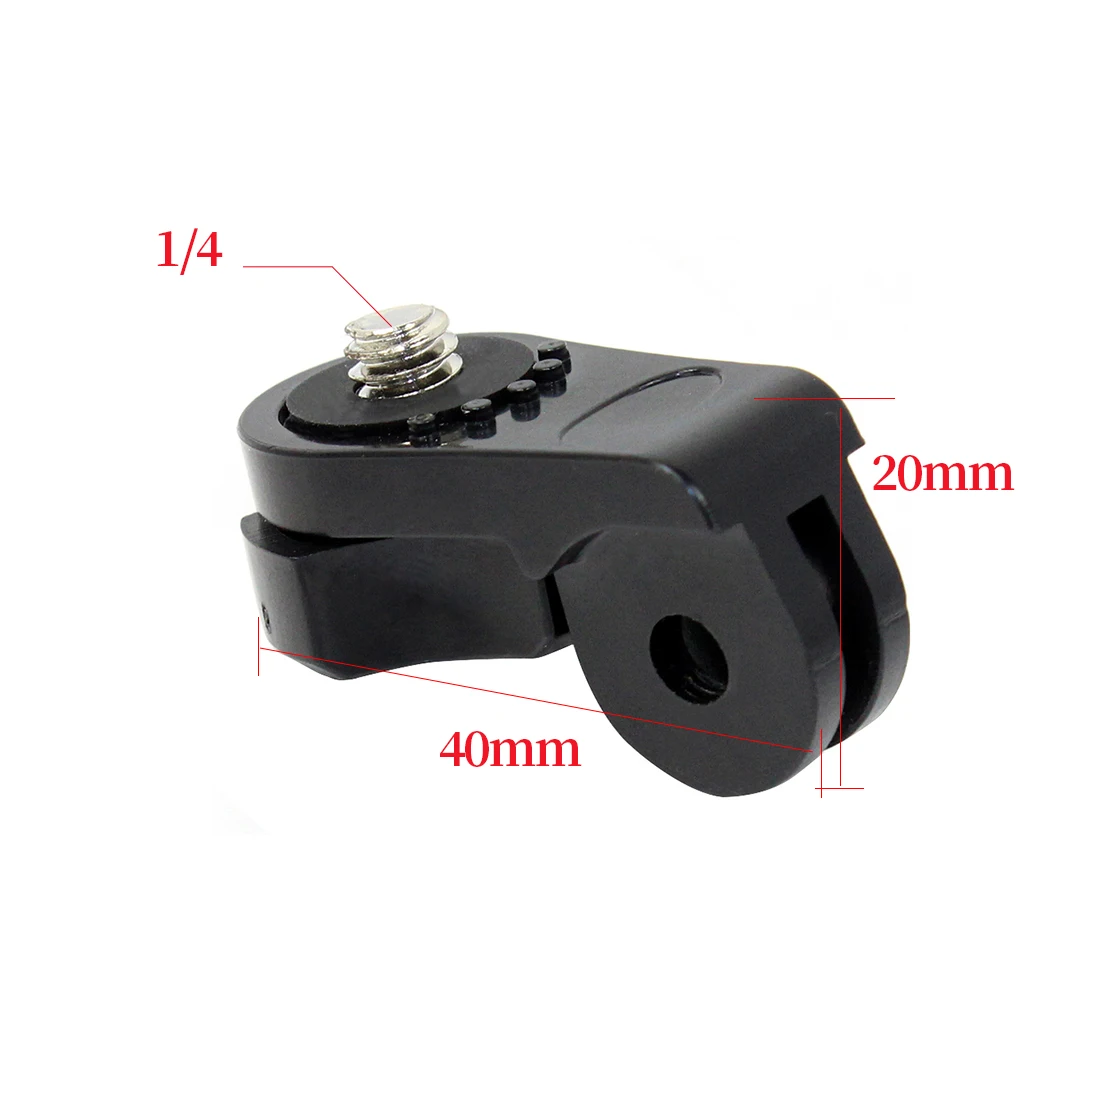 

Universal 1/4 inch Tripod Mount Adapter Mini Monopod Converter Action Camera Holder for GoPro Hero 8 7 6 5 Insta360 Selfie Stick